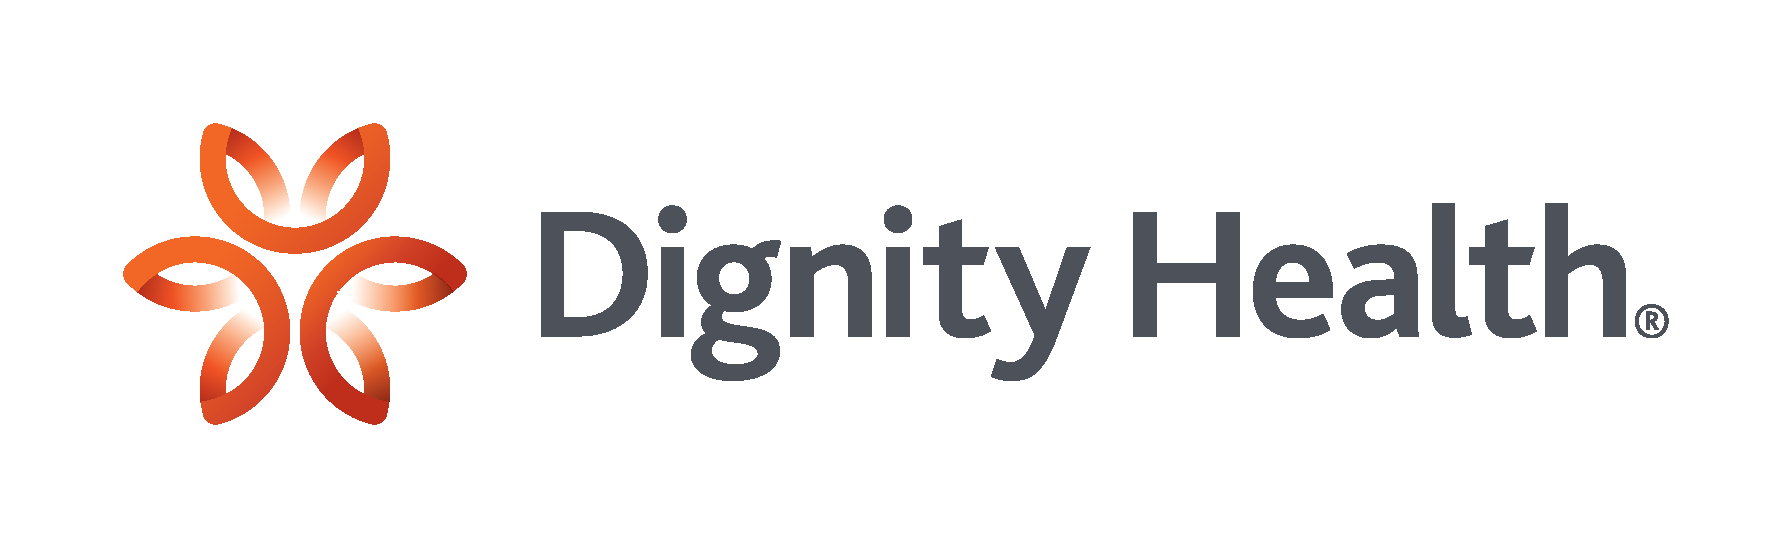 Dignity Health Horizontal.png